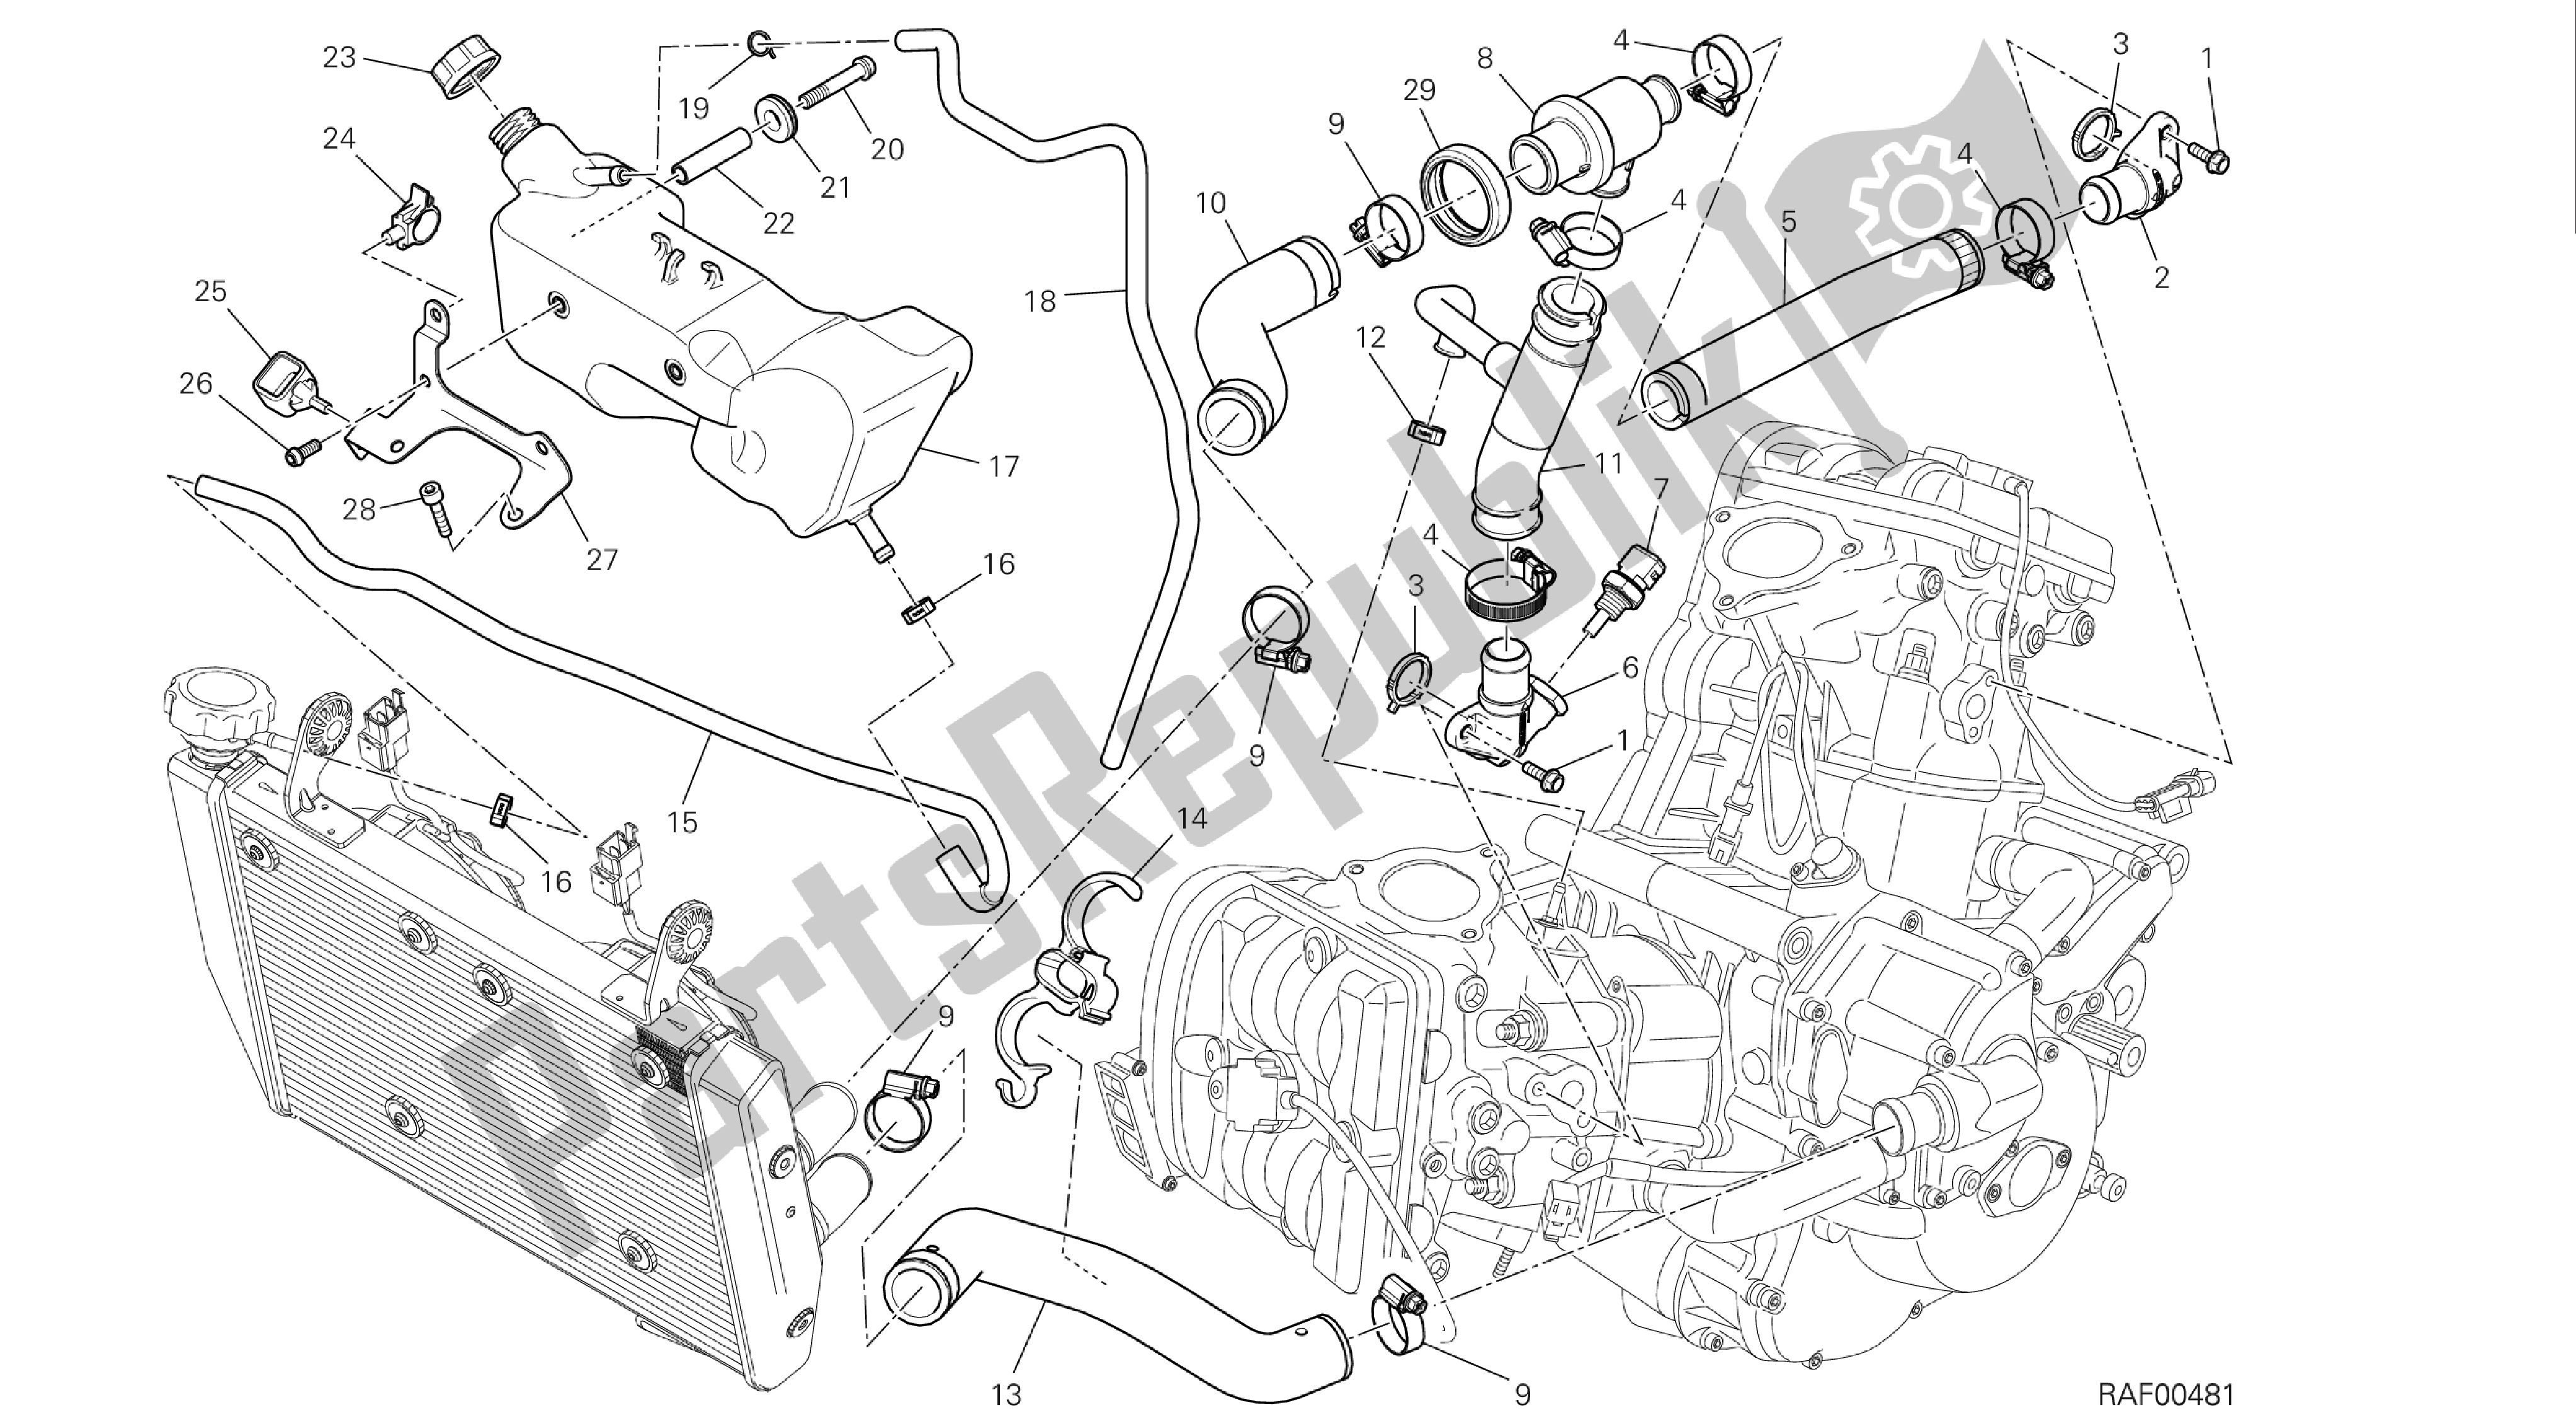 Todas las partes para Dibujo 031 - Circuito De Enfriamiento [mod: Hym-sp; Xst: Aus, Eur, Fra, Jap] Group Fr Ame de Ducati Hypermotard 821 2013